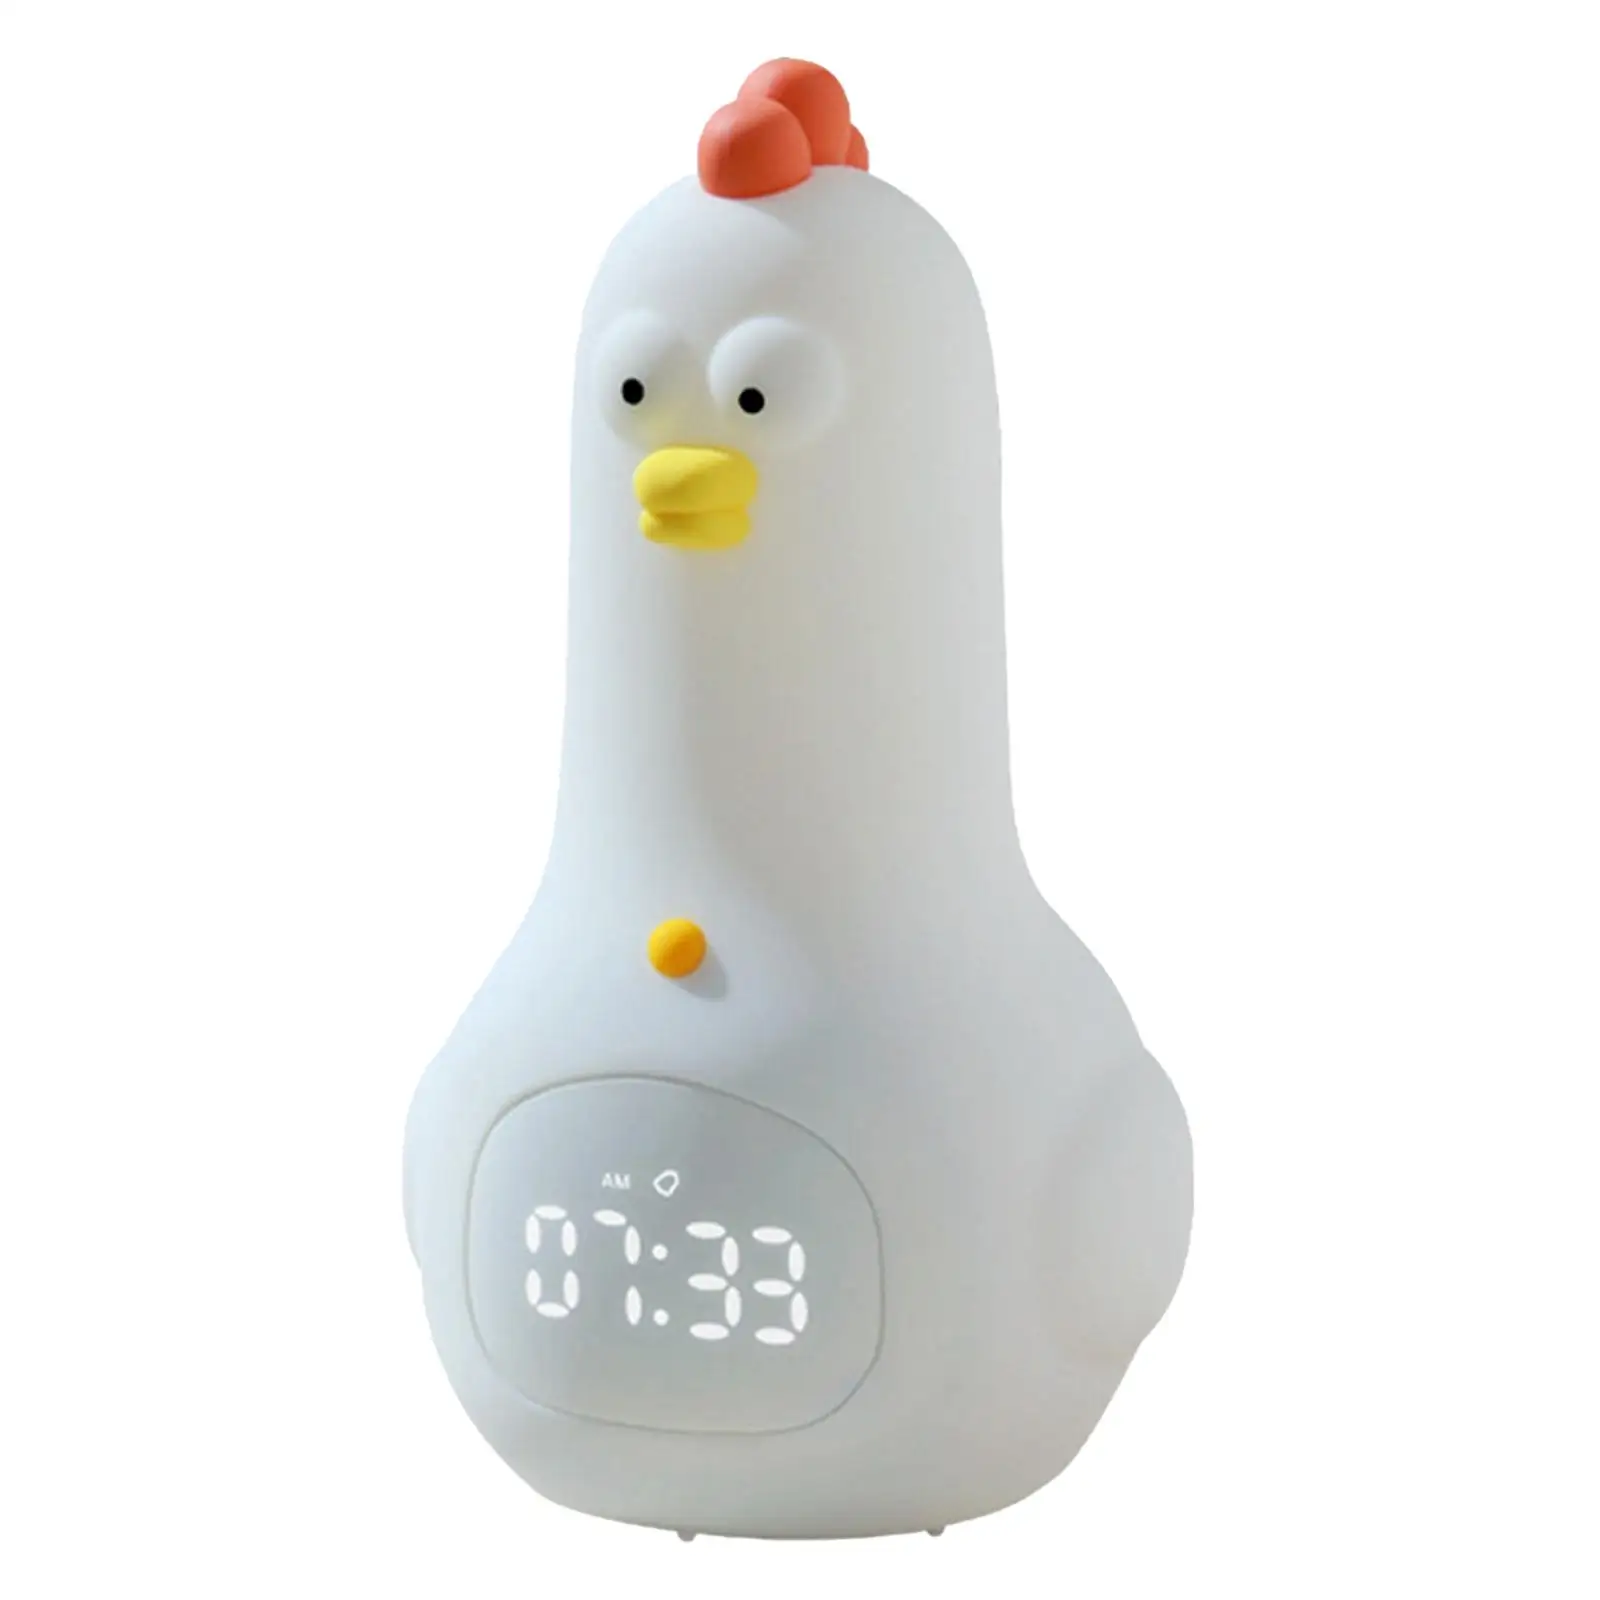 Lovely Chicken Silicone Night Light Alarm Clock USB Bedside Lamp for Sleeping Bedroom Living Room Children Kids Gift